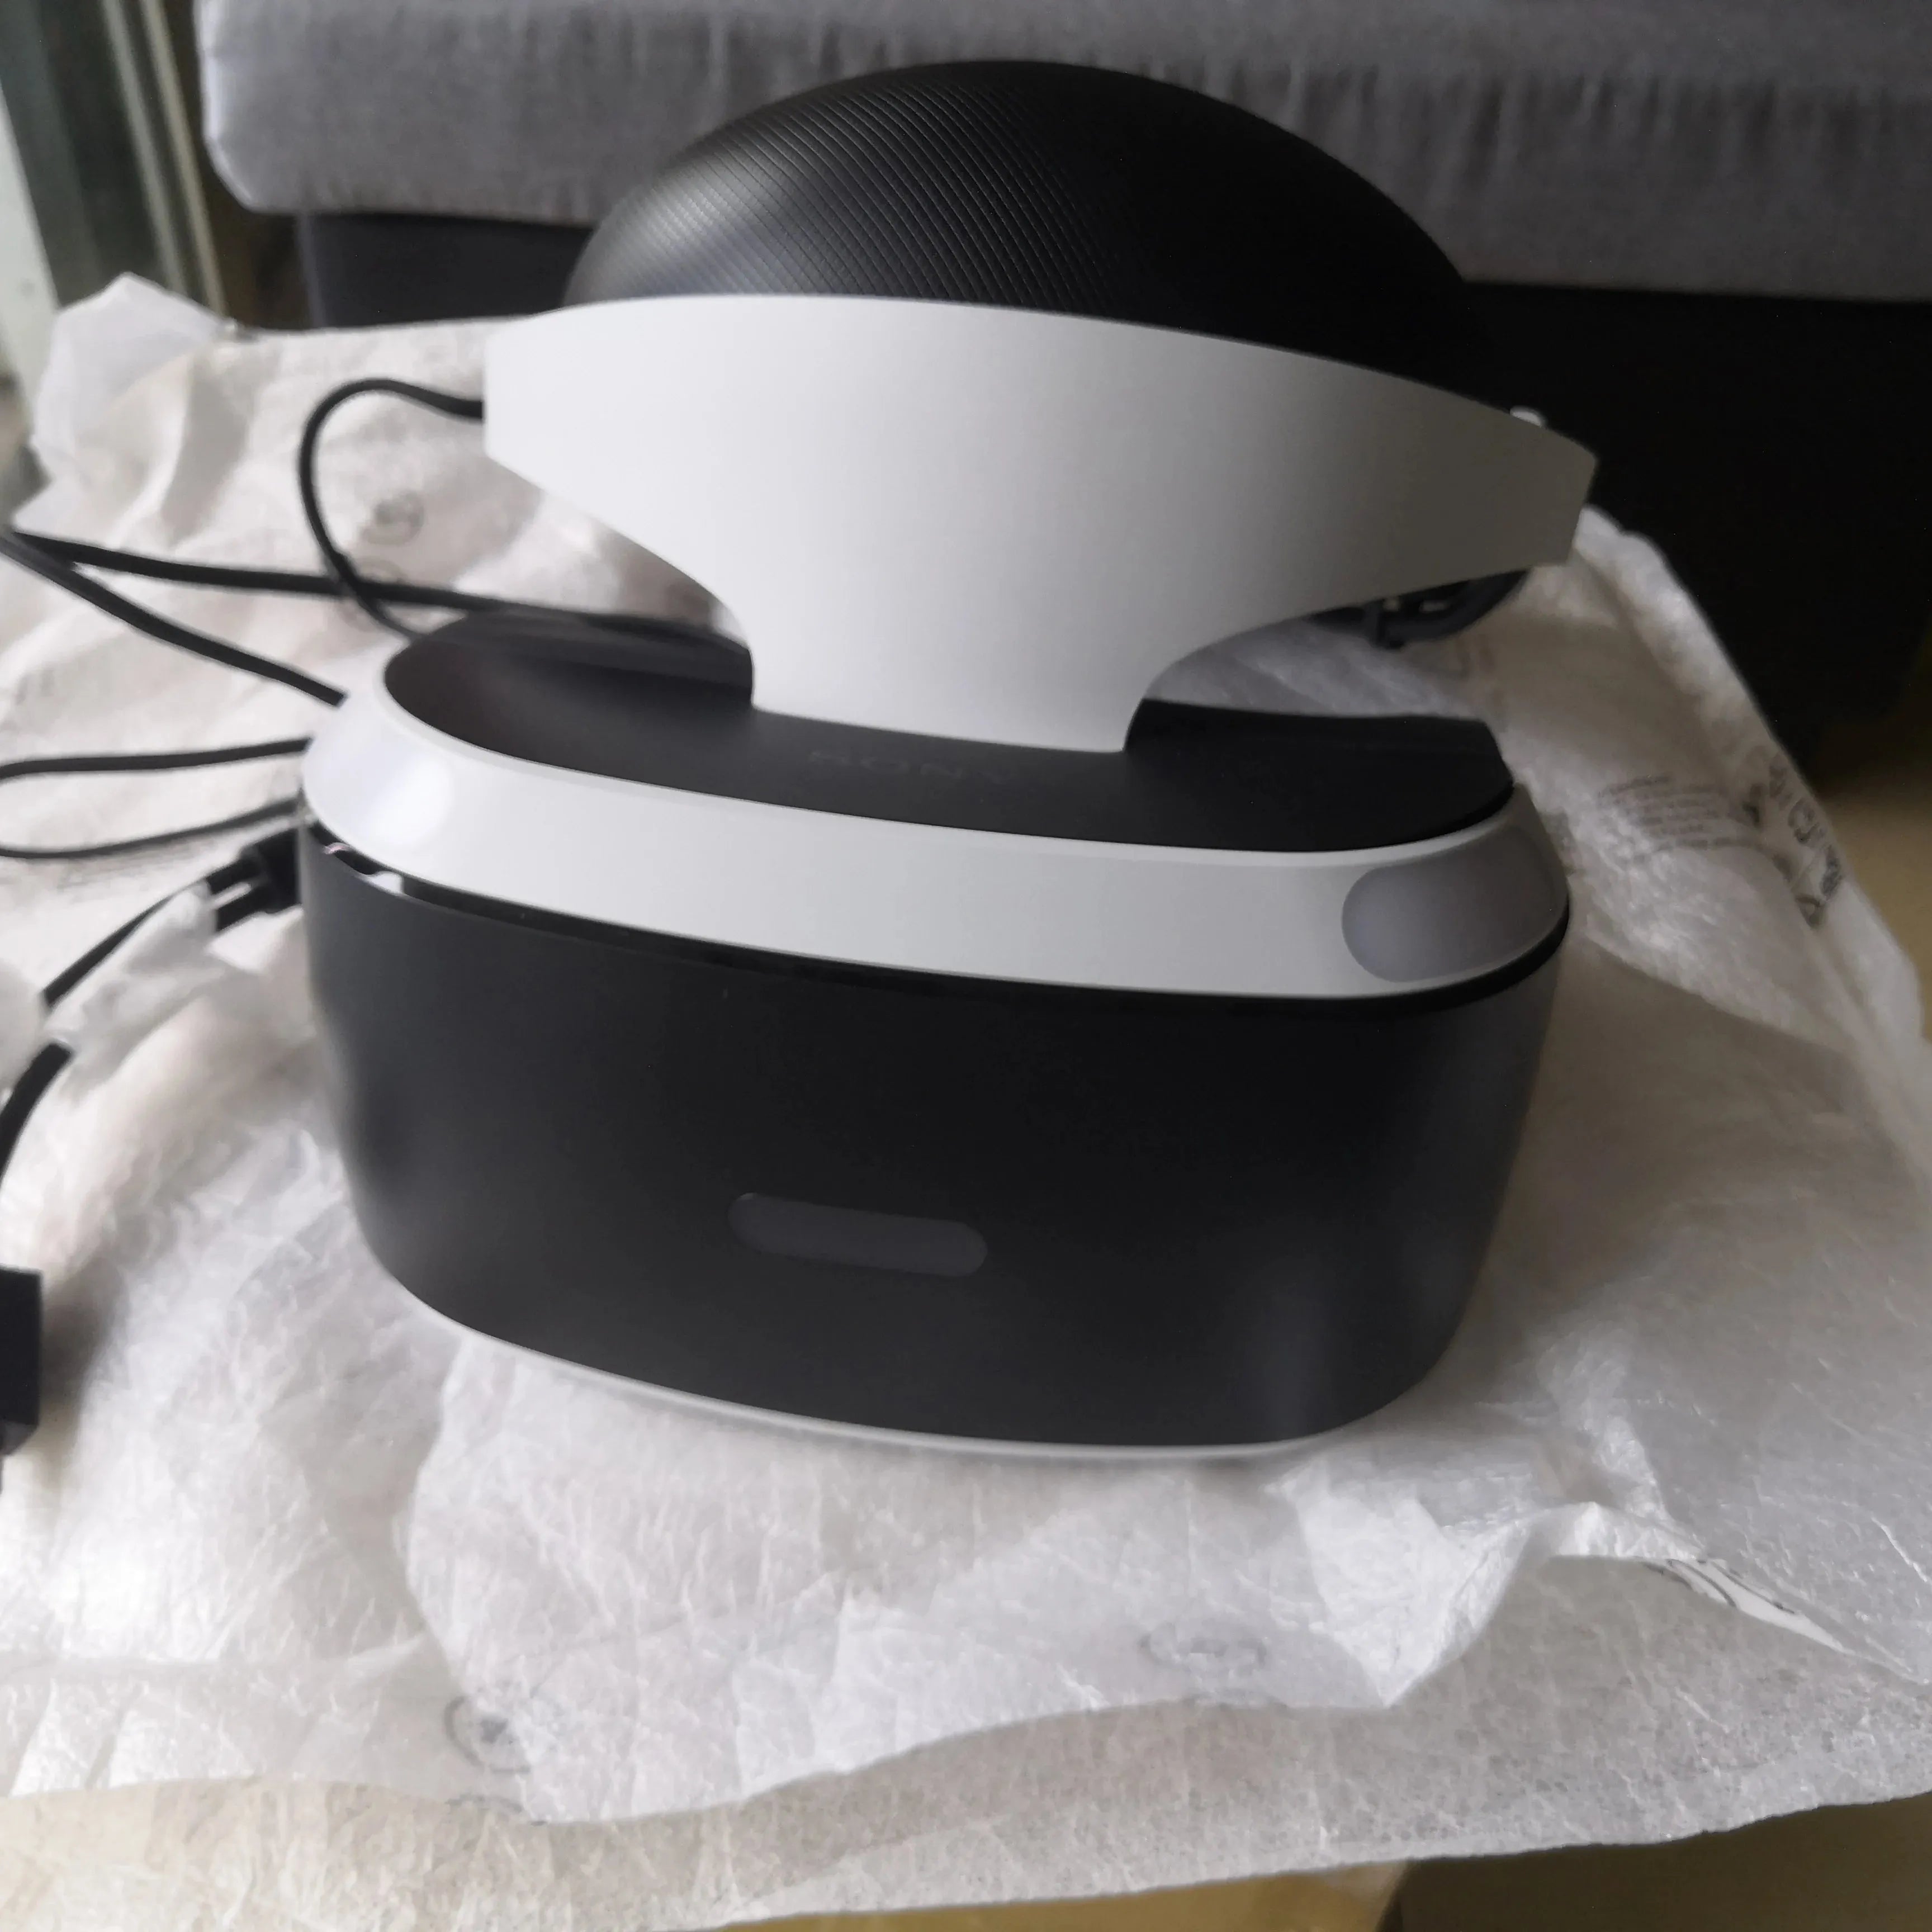 100% Original FOR Sony PS4 VR Helmet Virtual Reality 1st Generation, Single Helmet Perfect Function